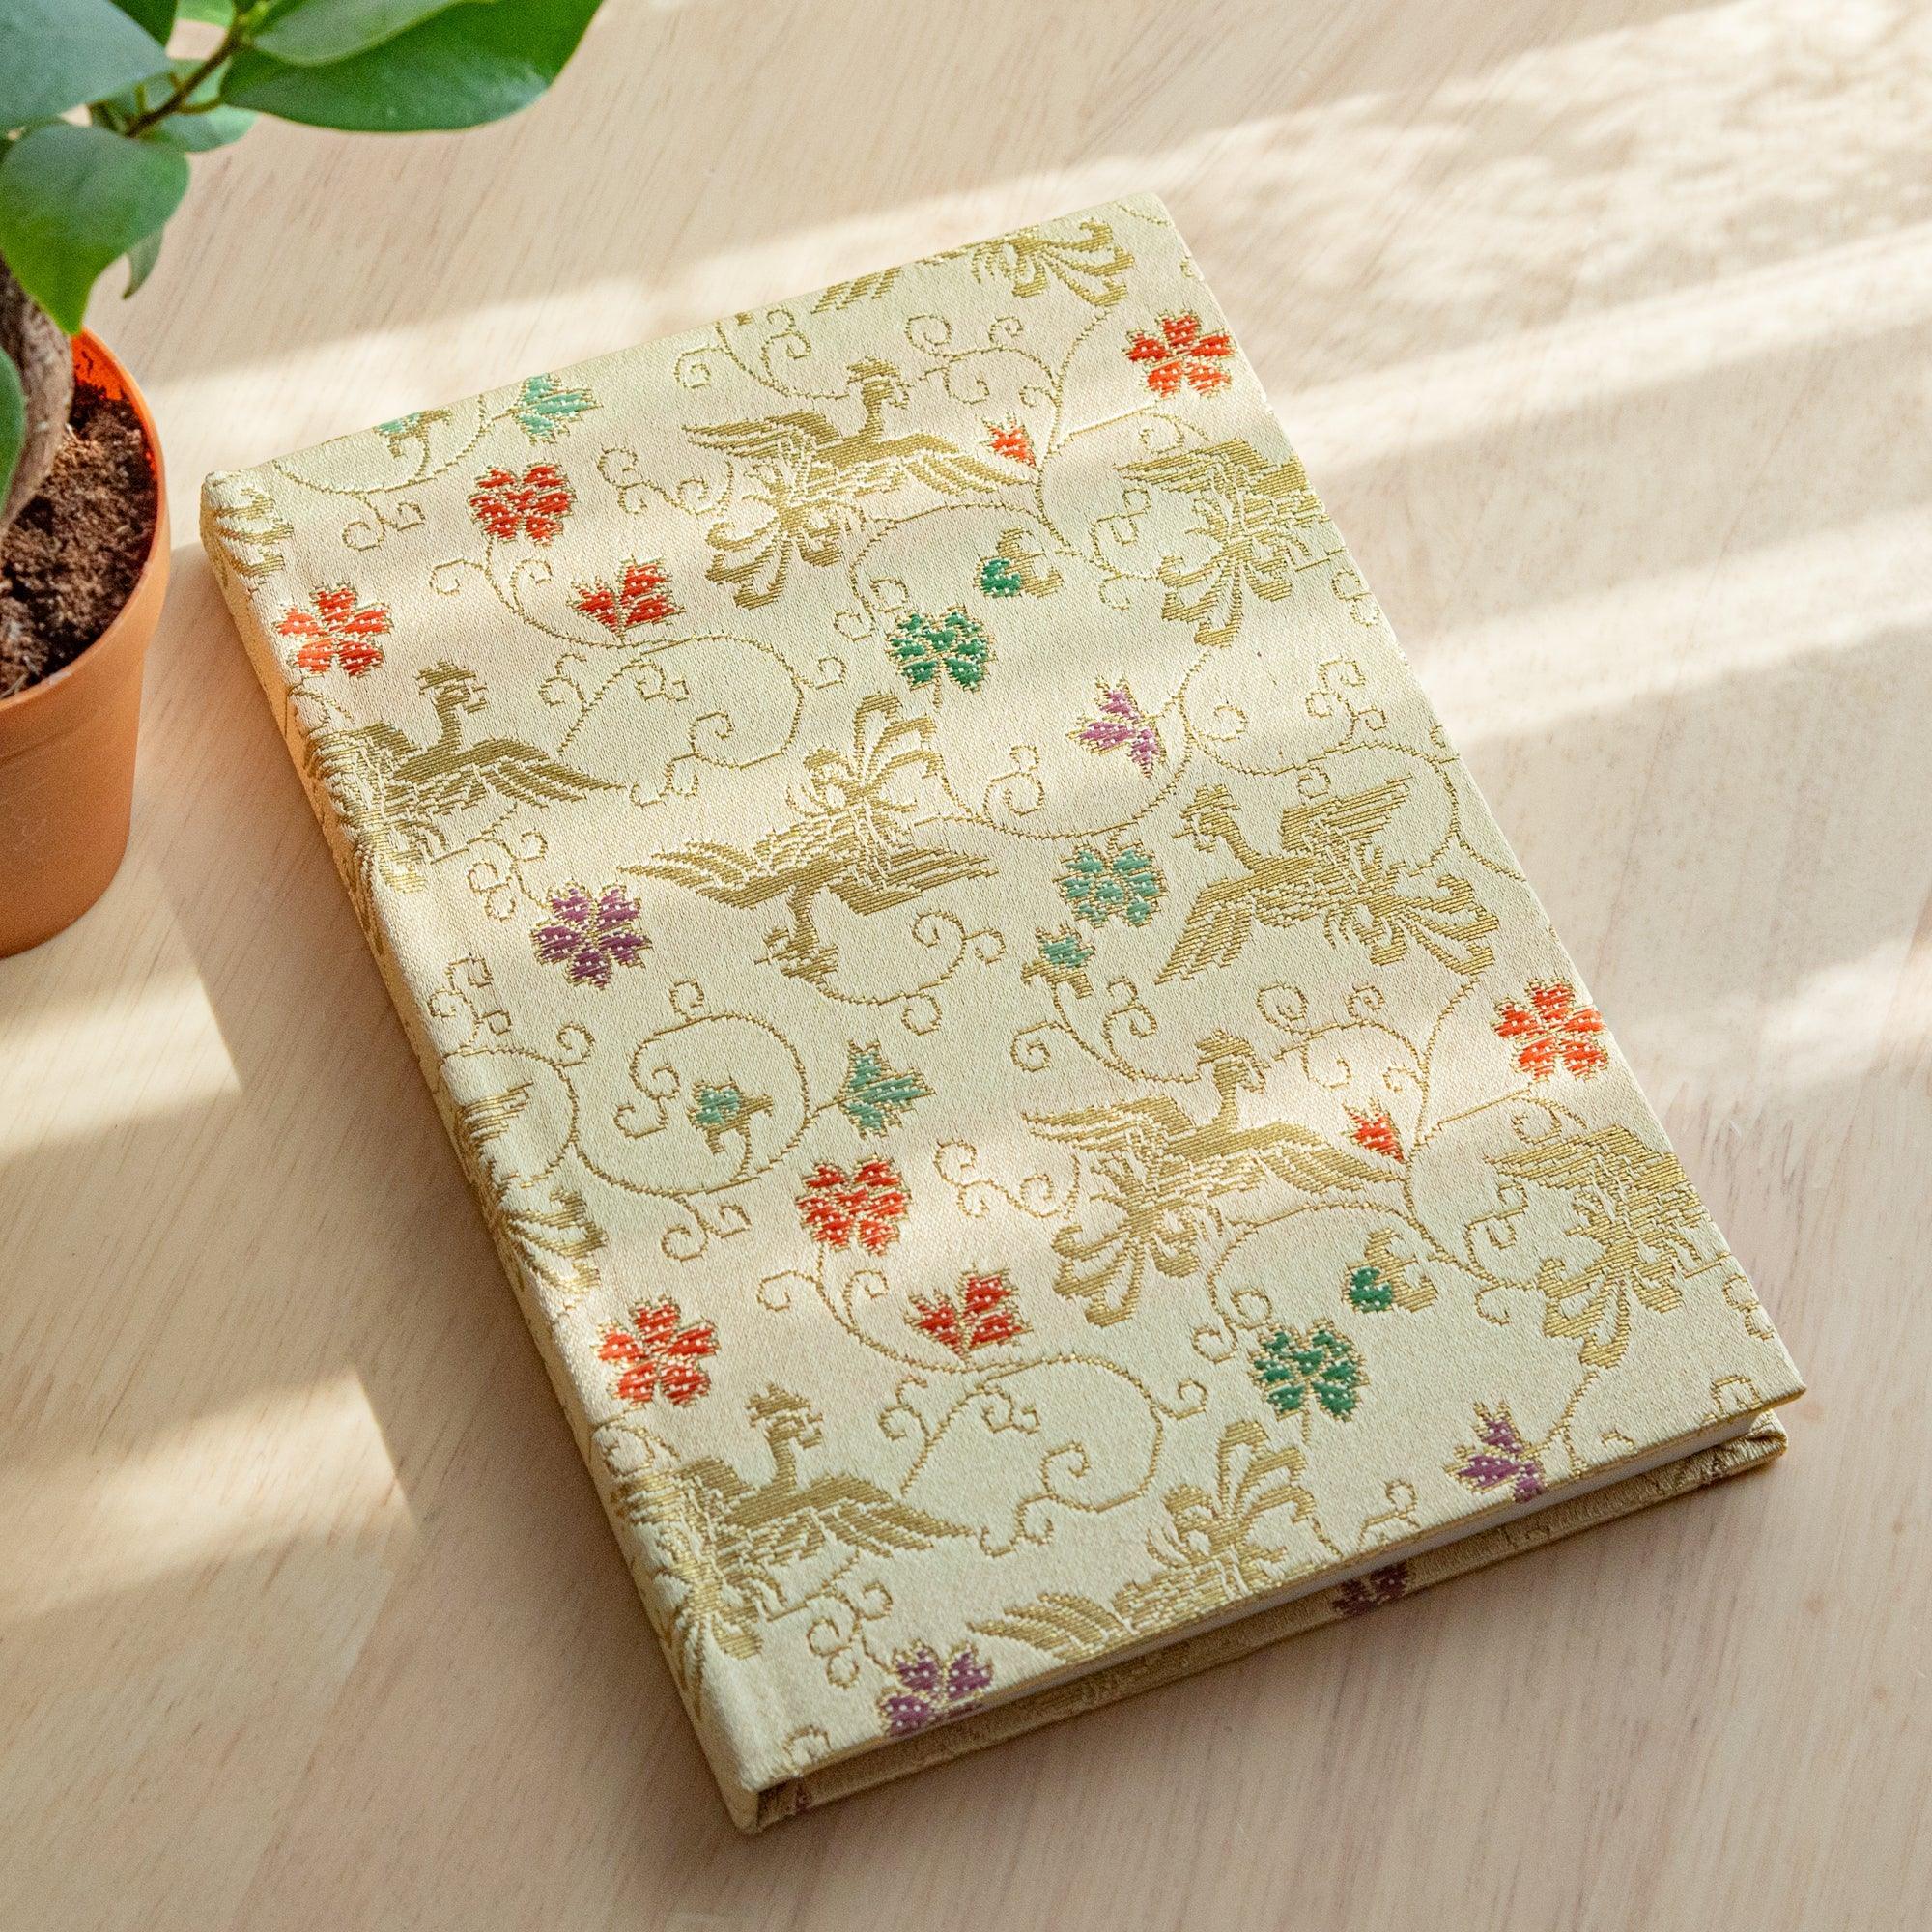 nishijin-textile-golden-phoenix-and-arabesque-gold-notebook-or-b6-morisan-komorebi-stationery-1 - Komorebi Stationery